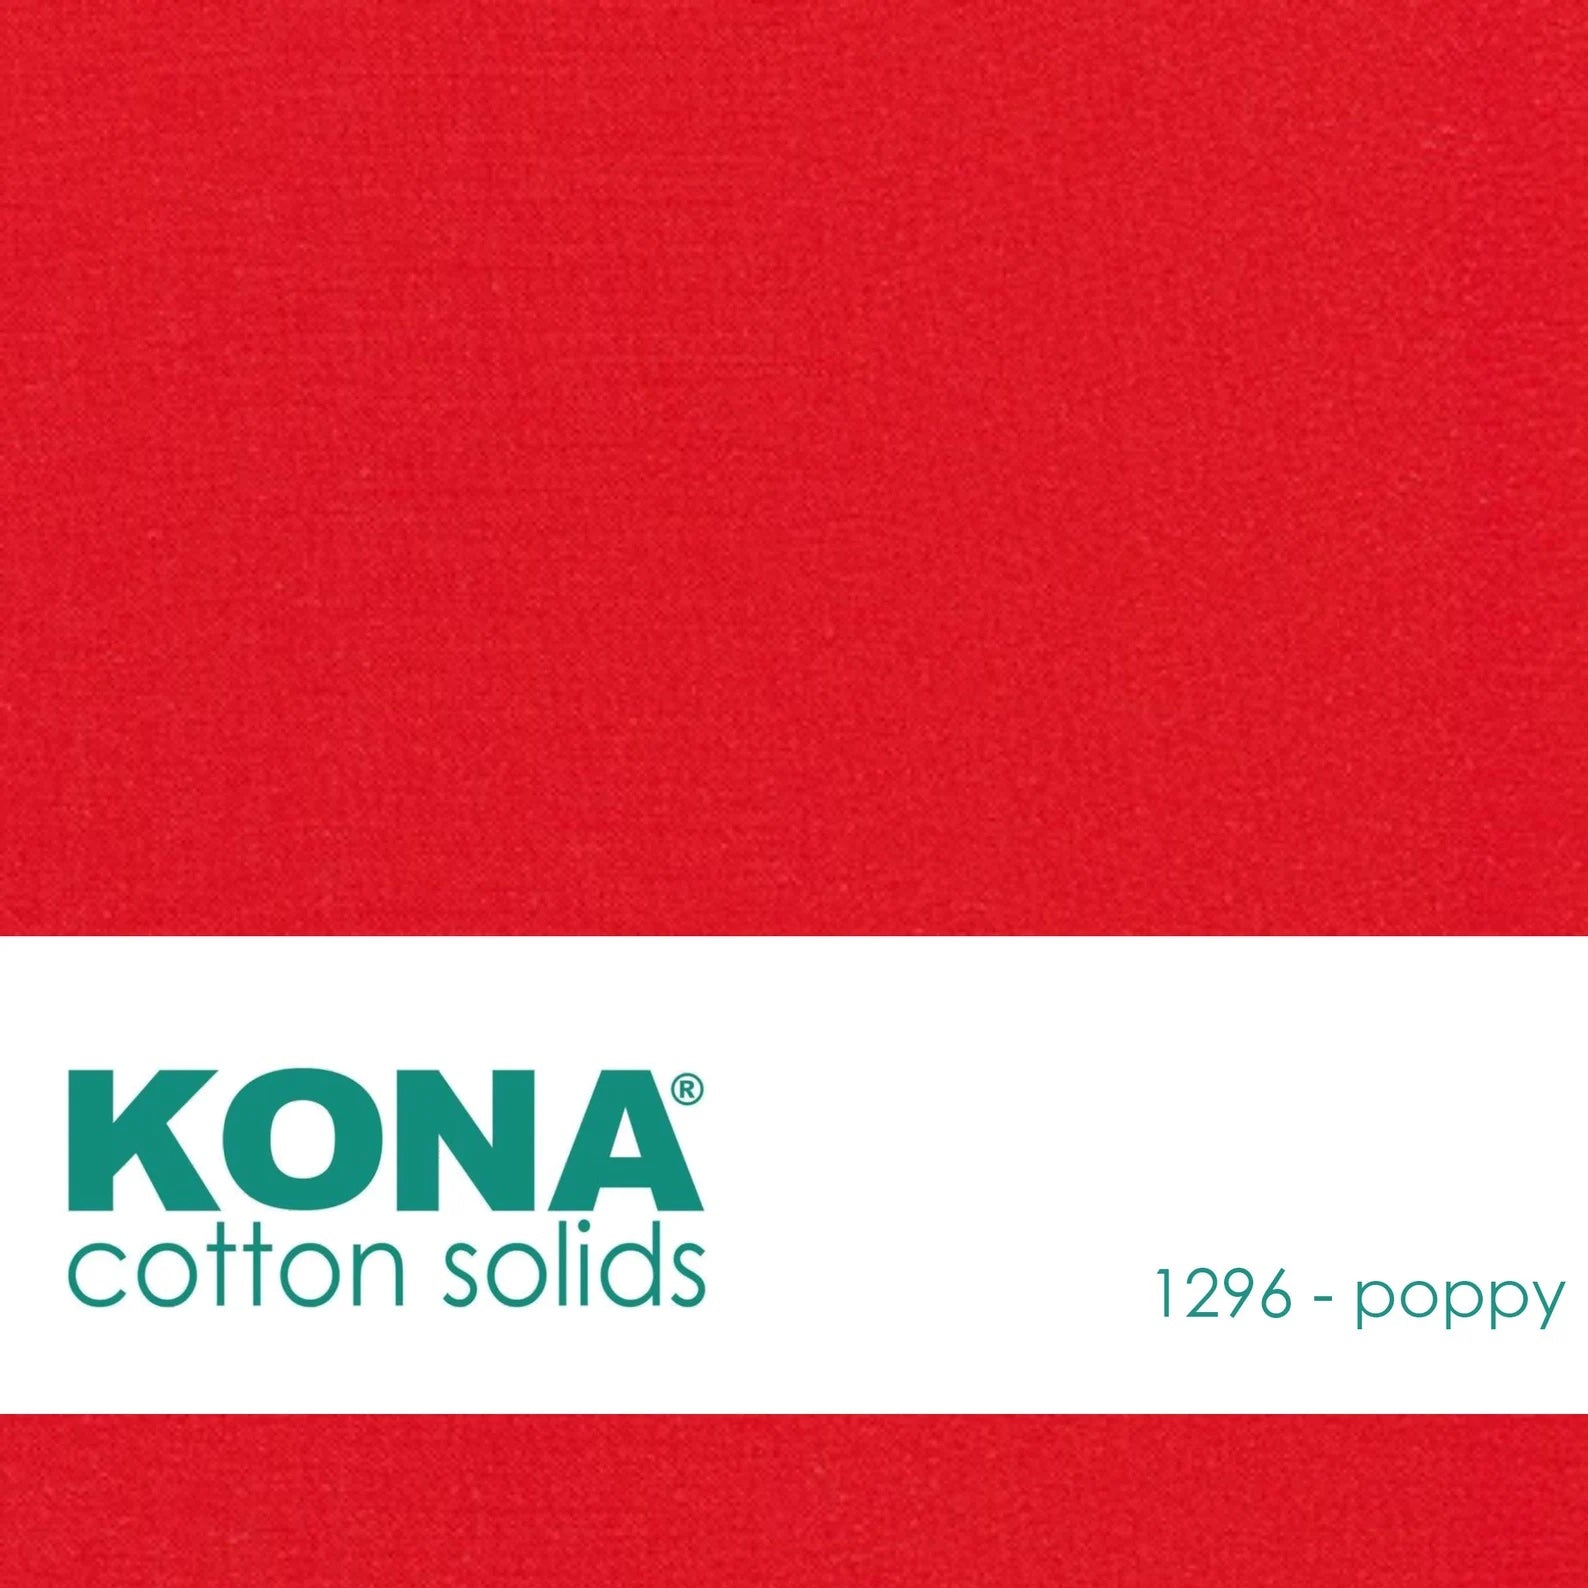 Kona Cotton Solid Fabric in Poppy